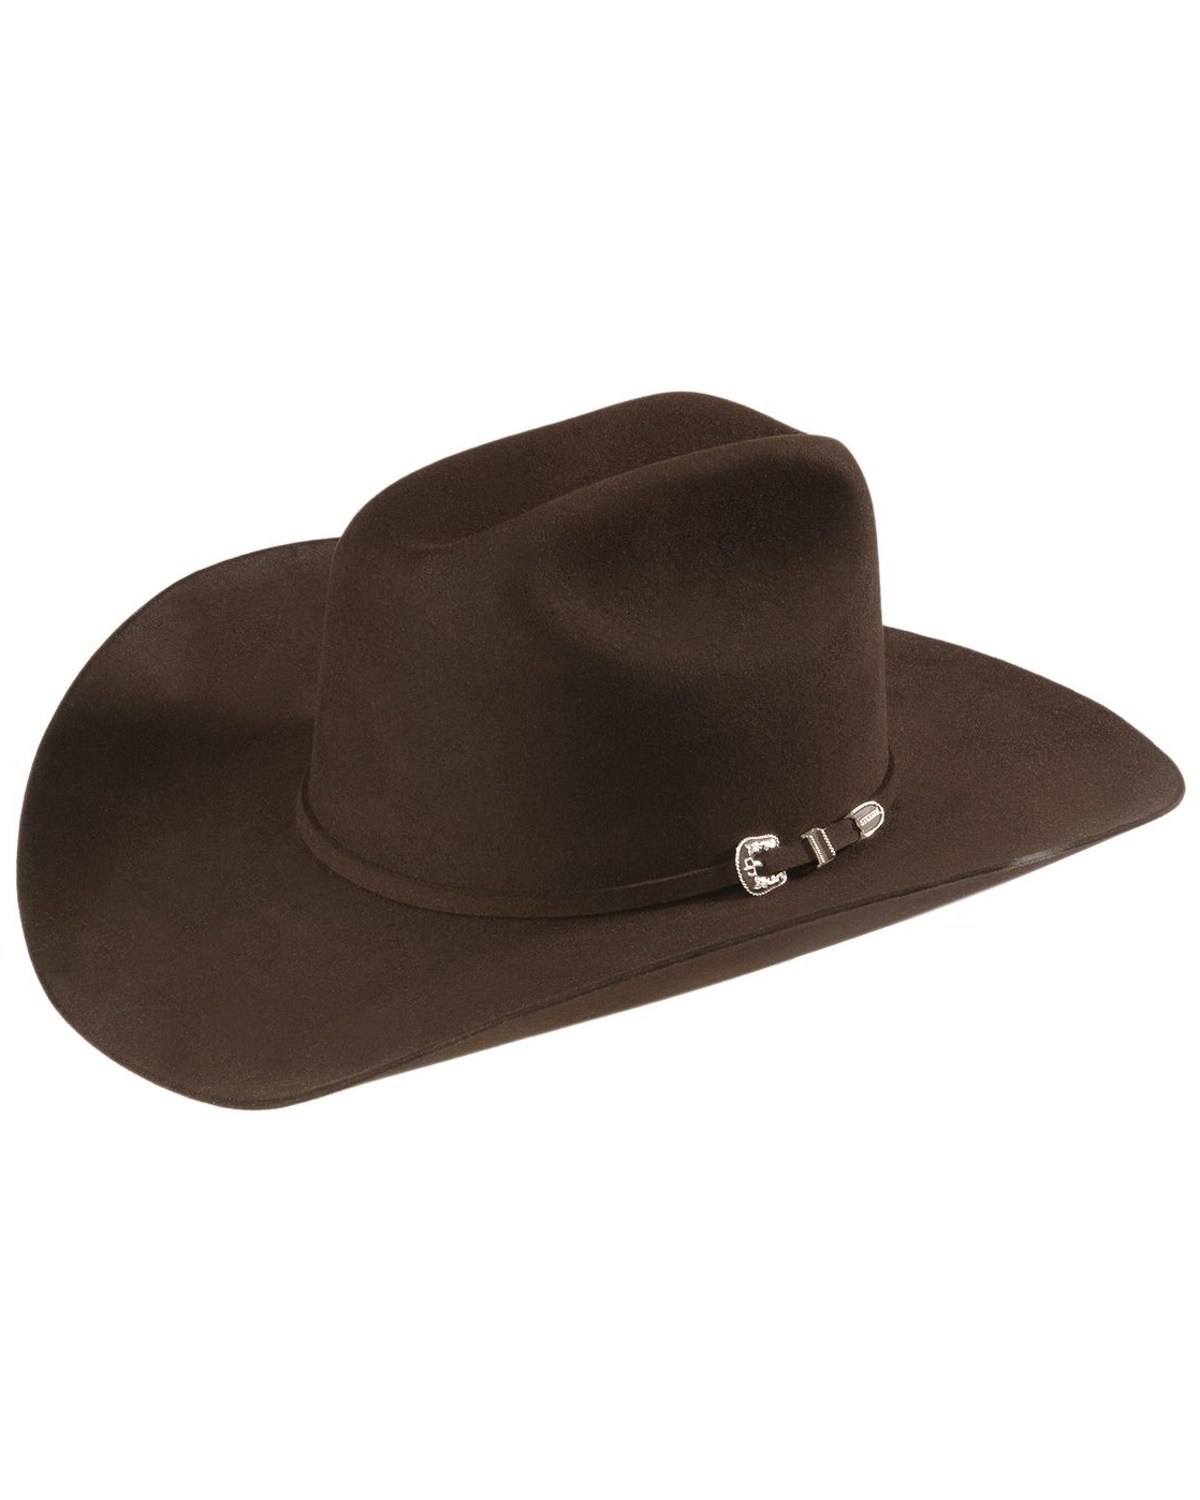 Stetson 6X Skyline Felt Cowboy Hat